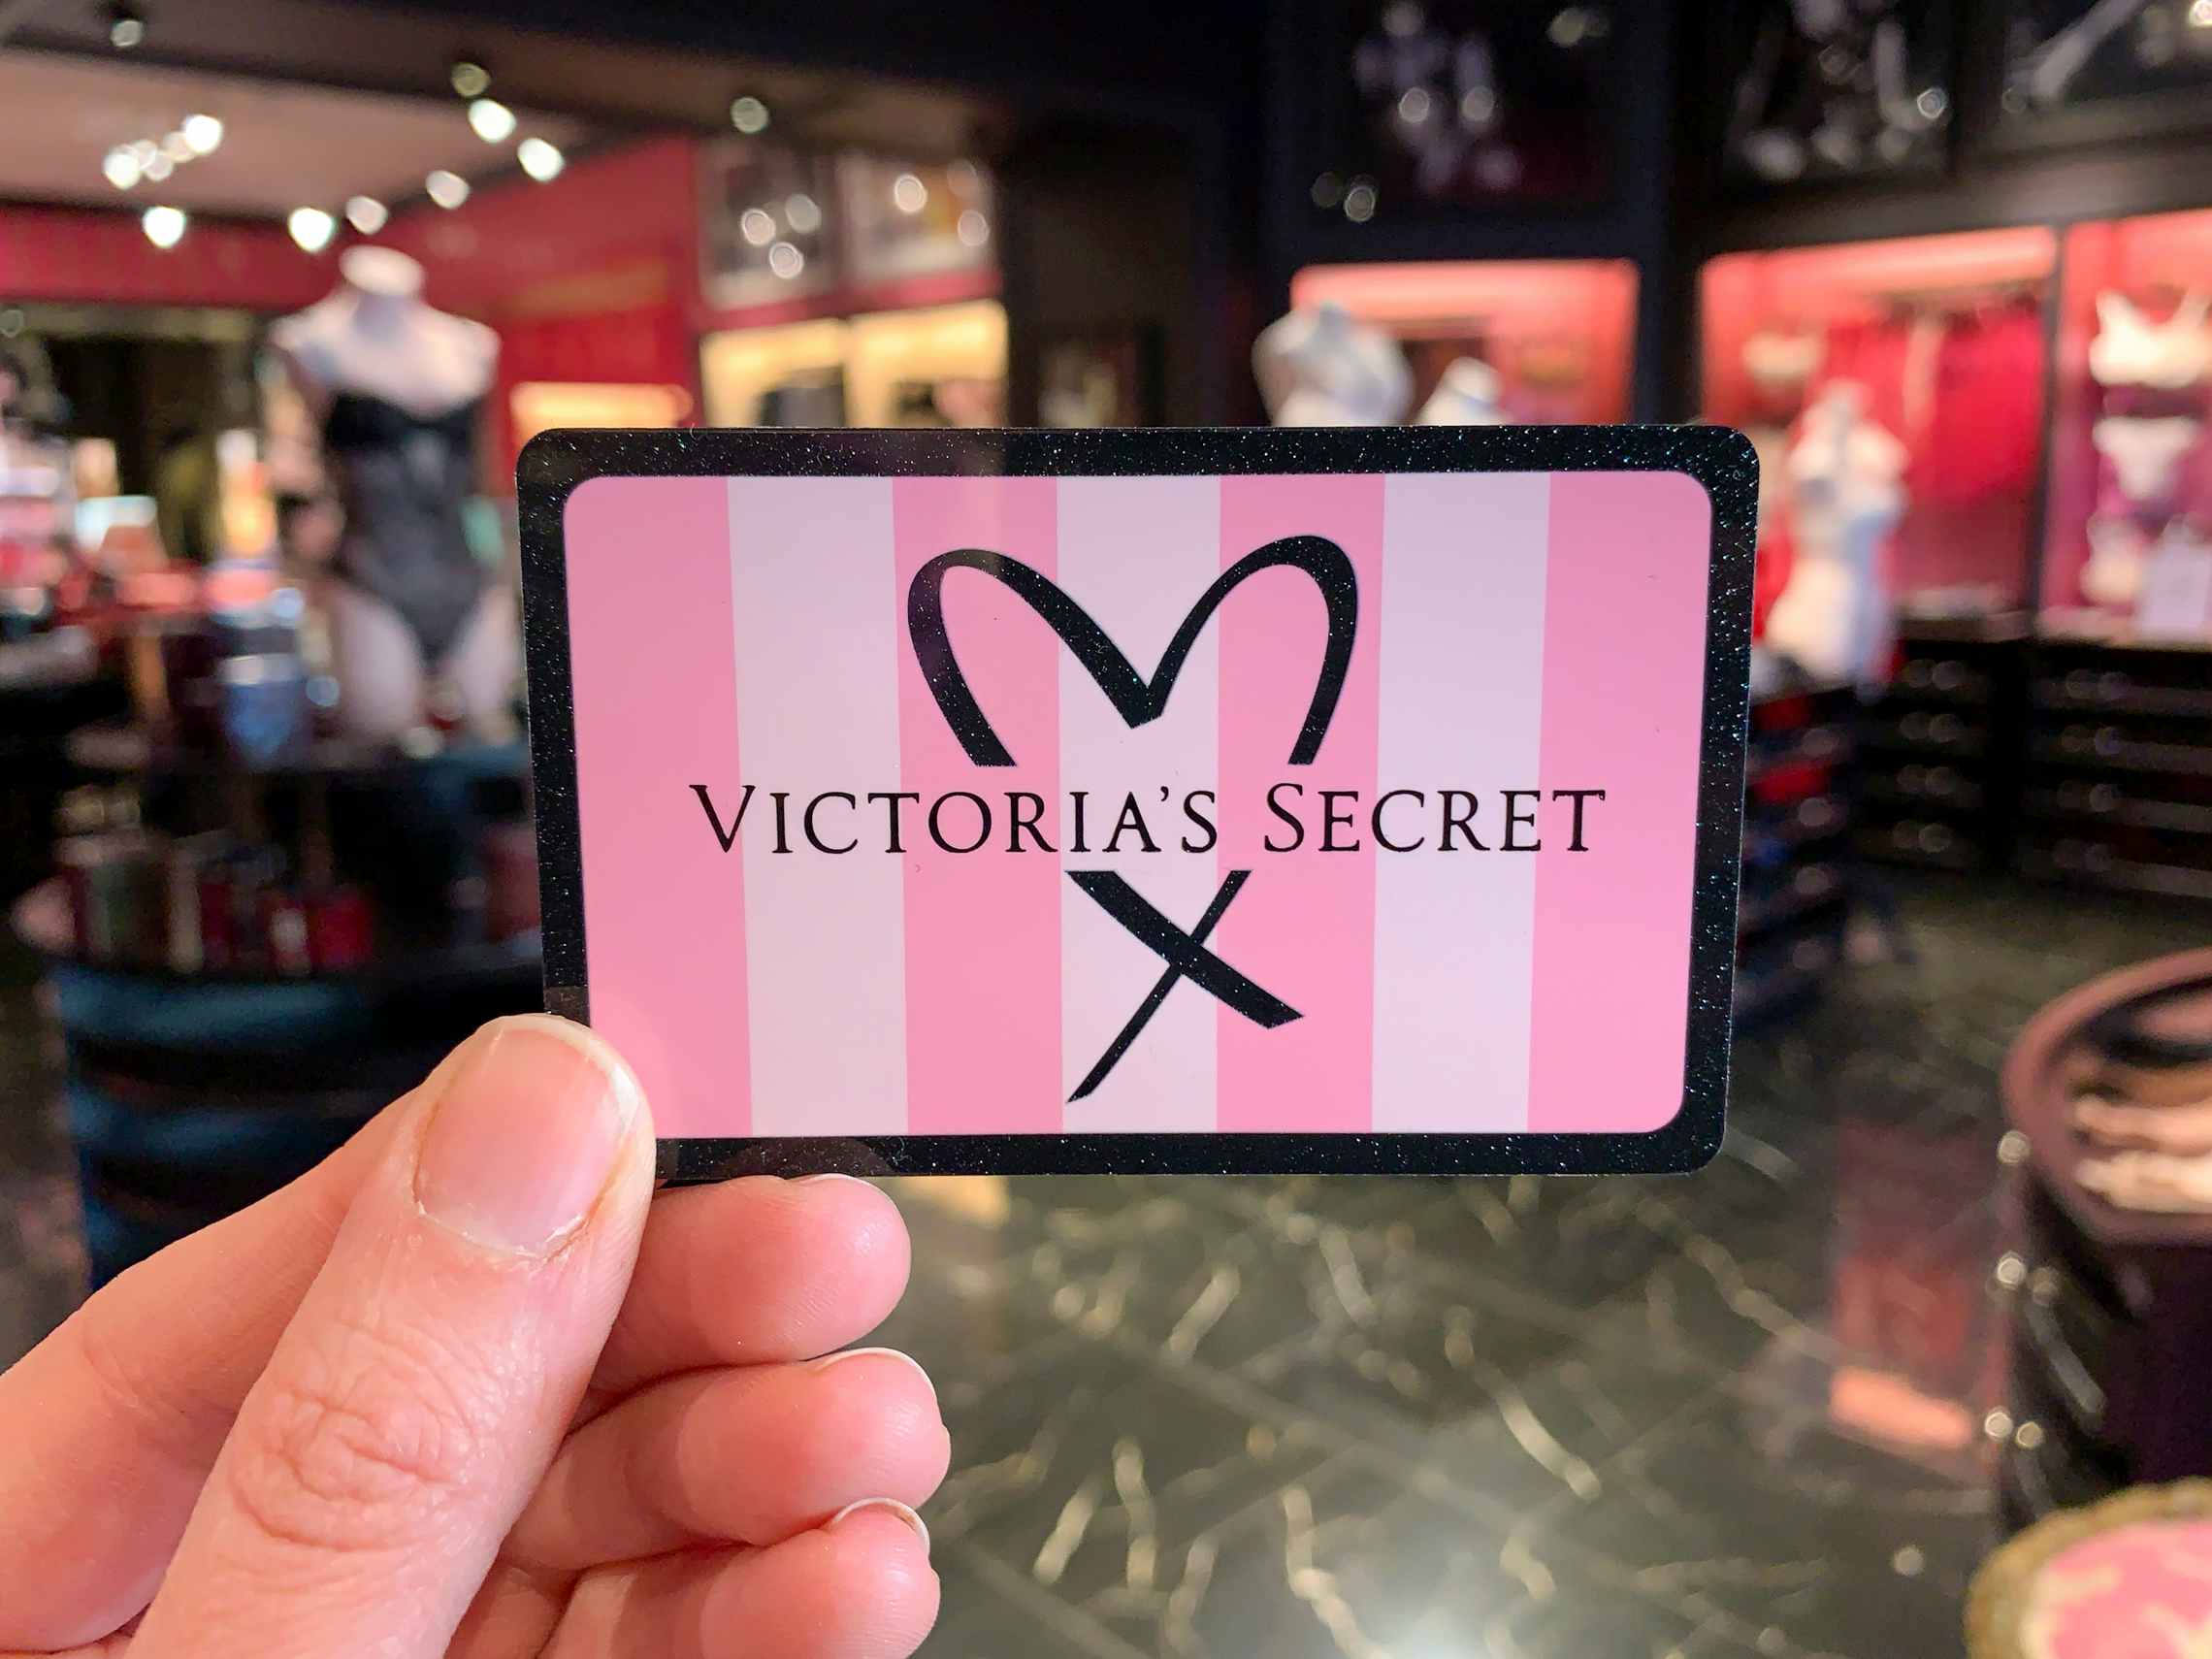 A person's hand holding a Victoria's Secret gift card inside a Victoria's Secret store.